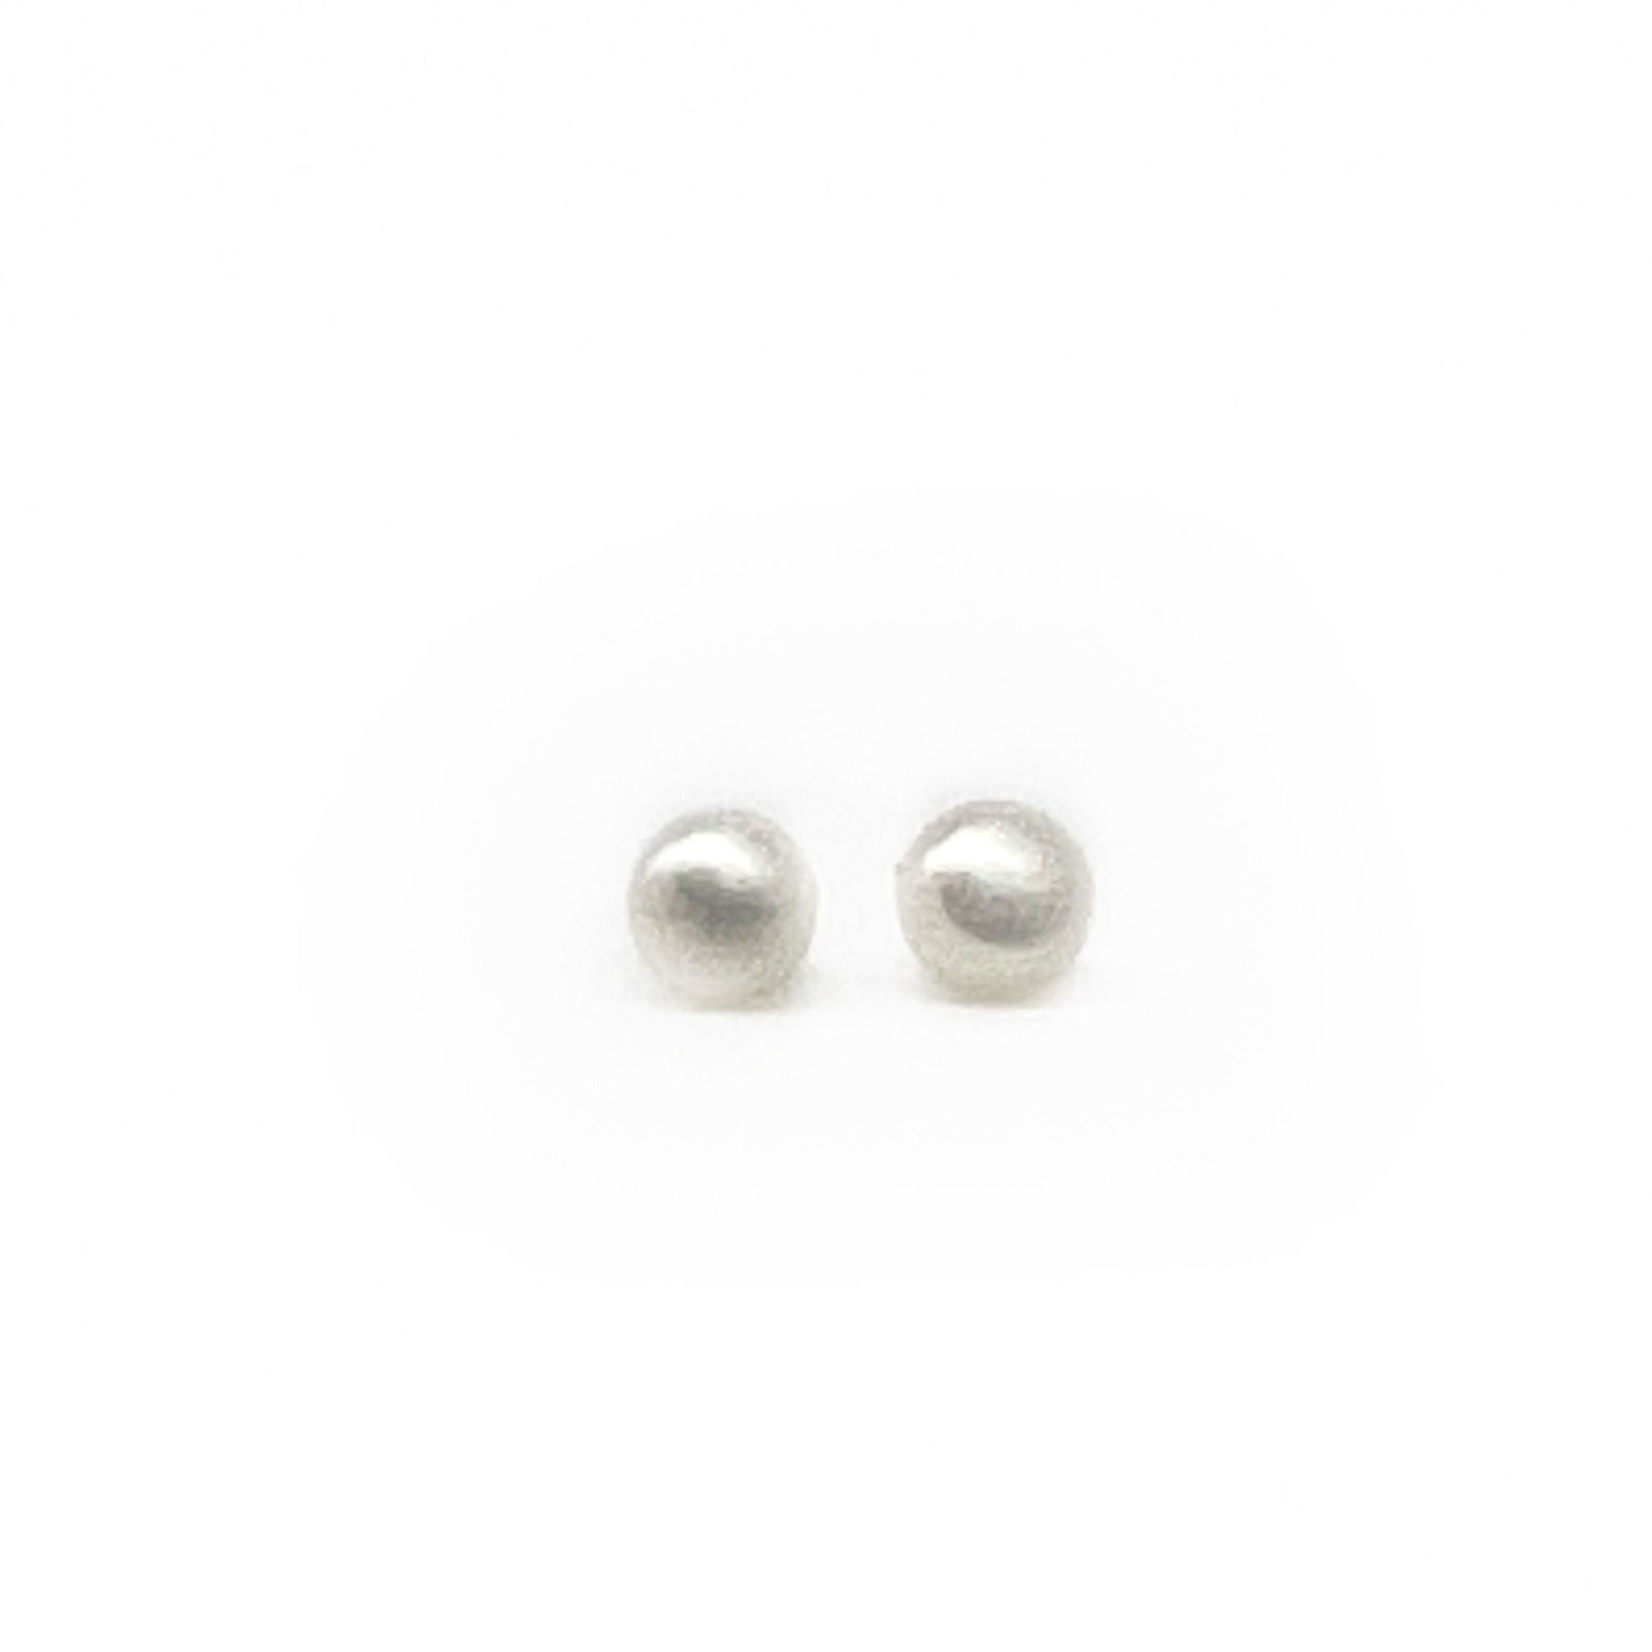 SE515 4mm S/S Pearl Stud Earrings White